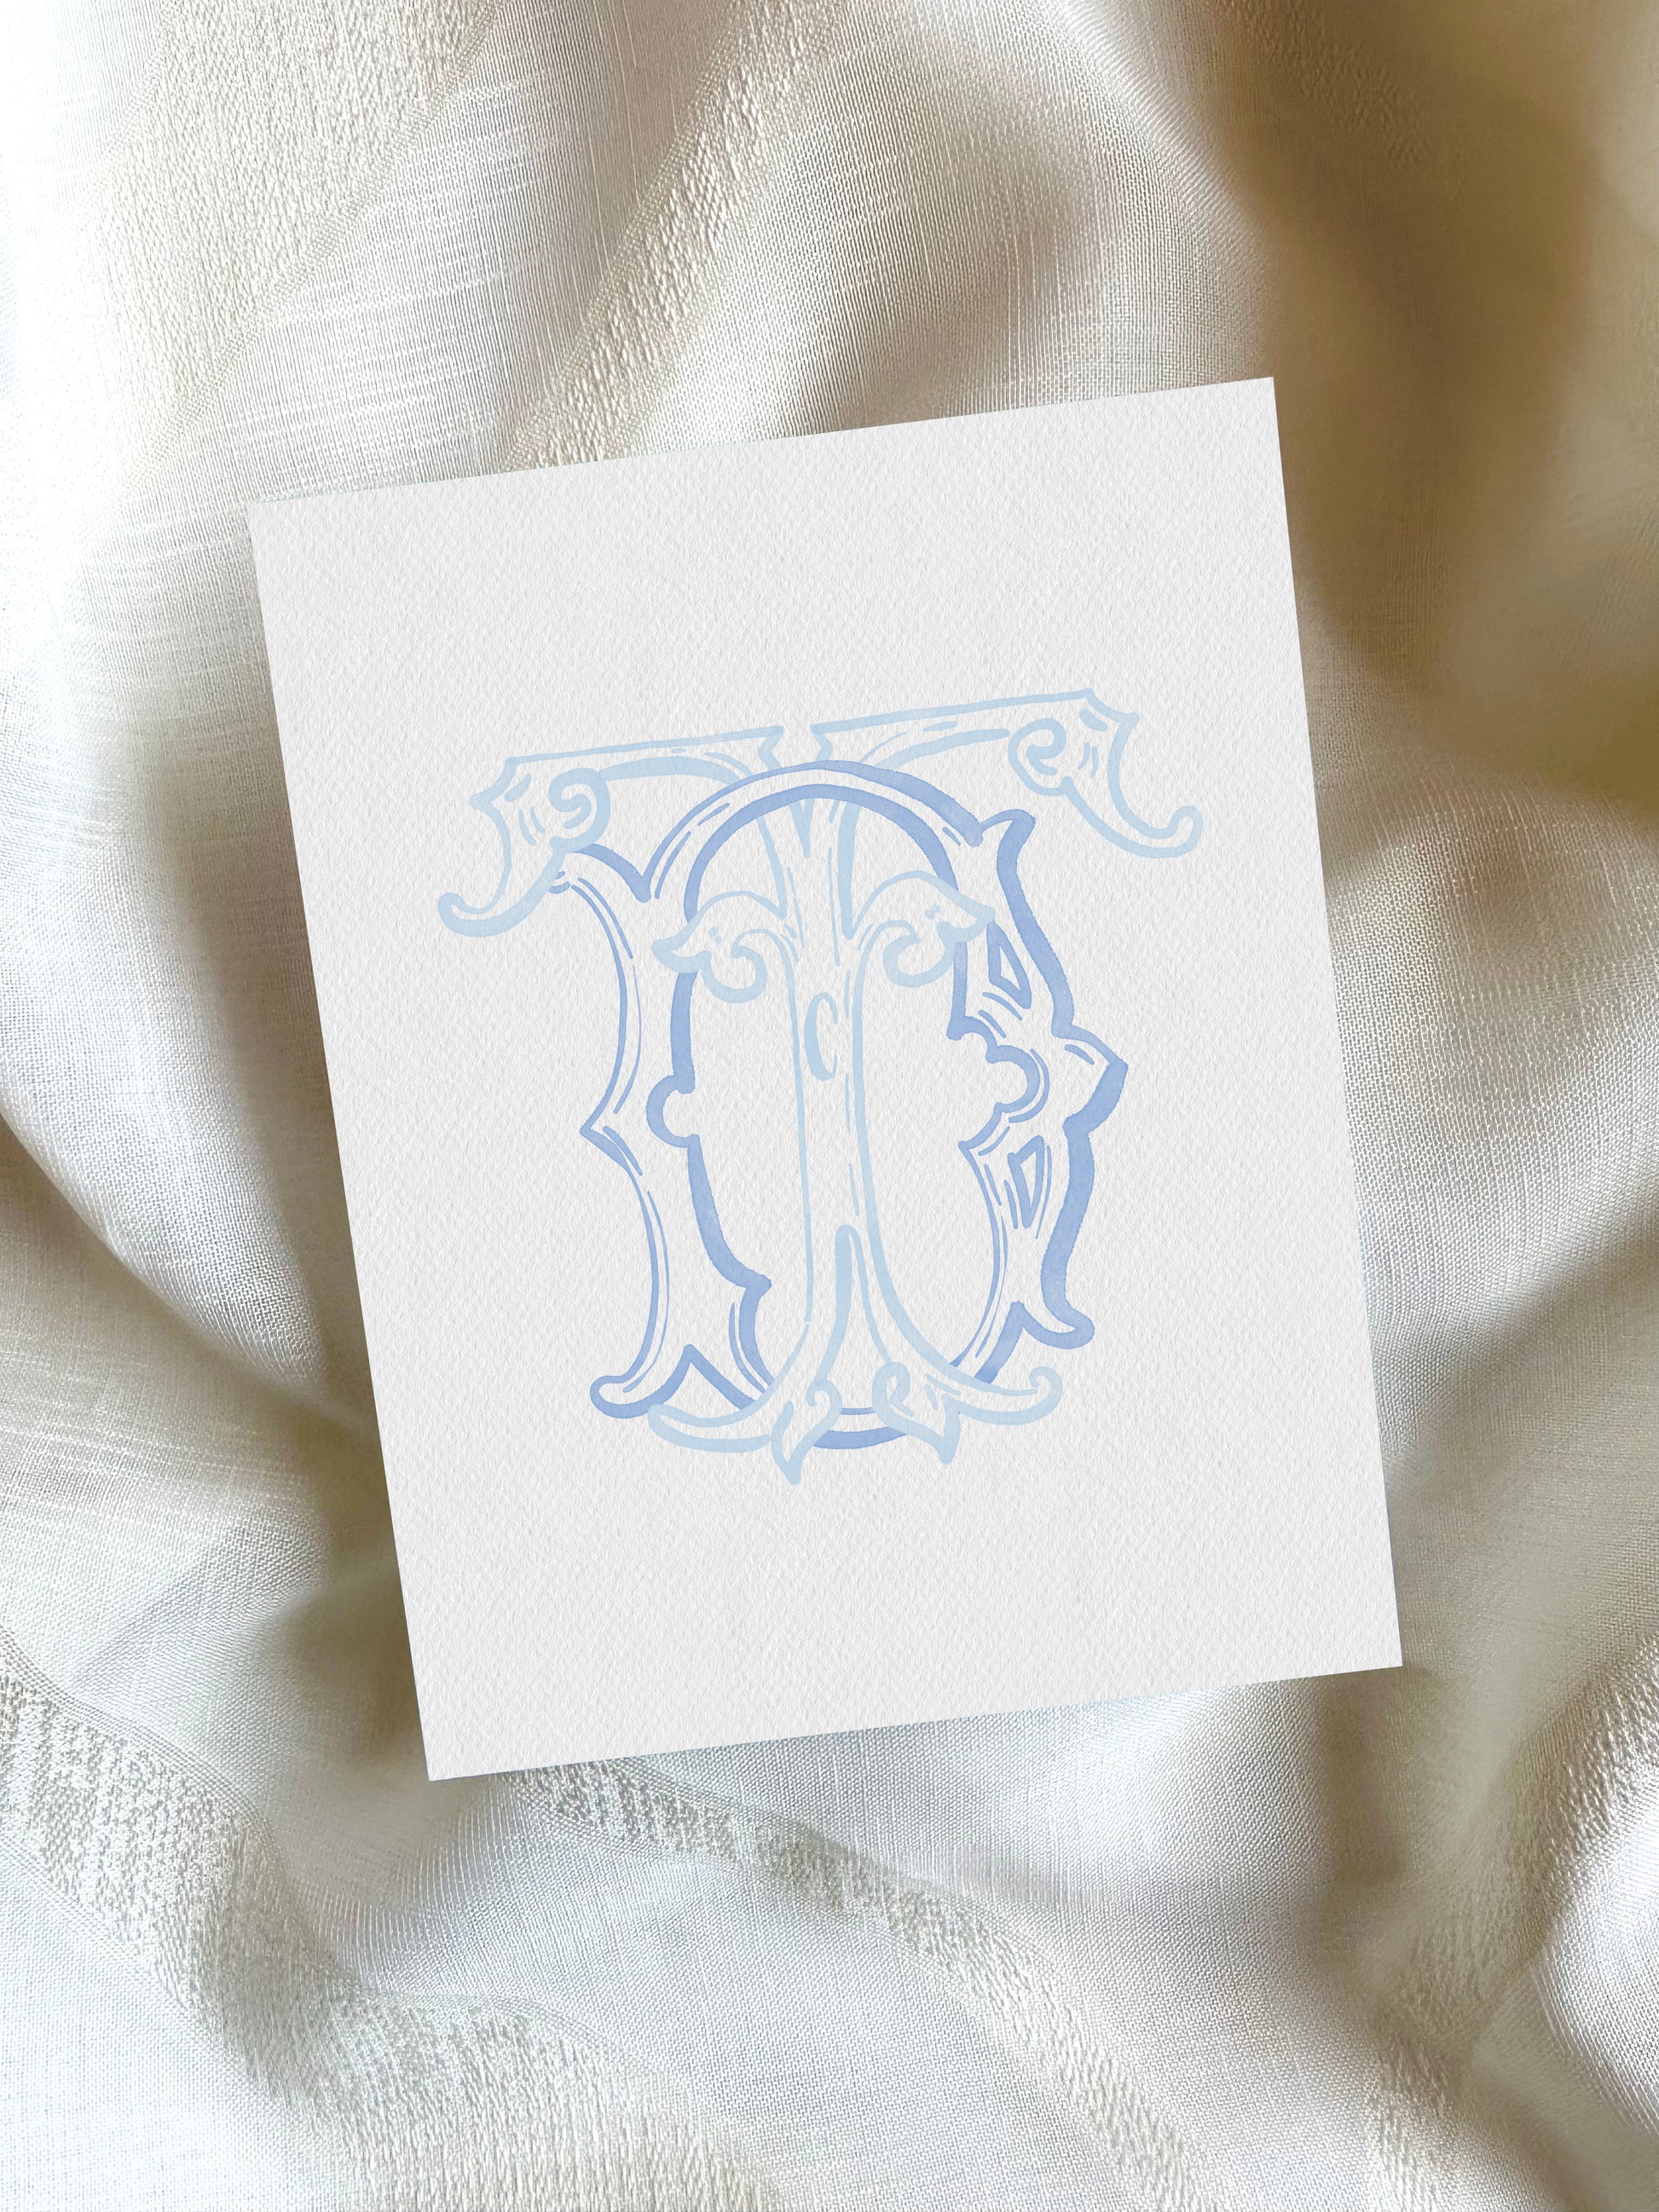 2 Letter Monogram with Letters DT TD | Digital Download - Wedding Monogram SVG, Personal Logo, Wedding Logo for Wedding Invitations The Wedding Crest Lab